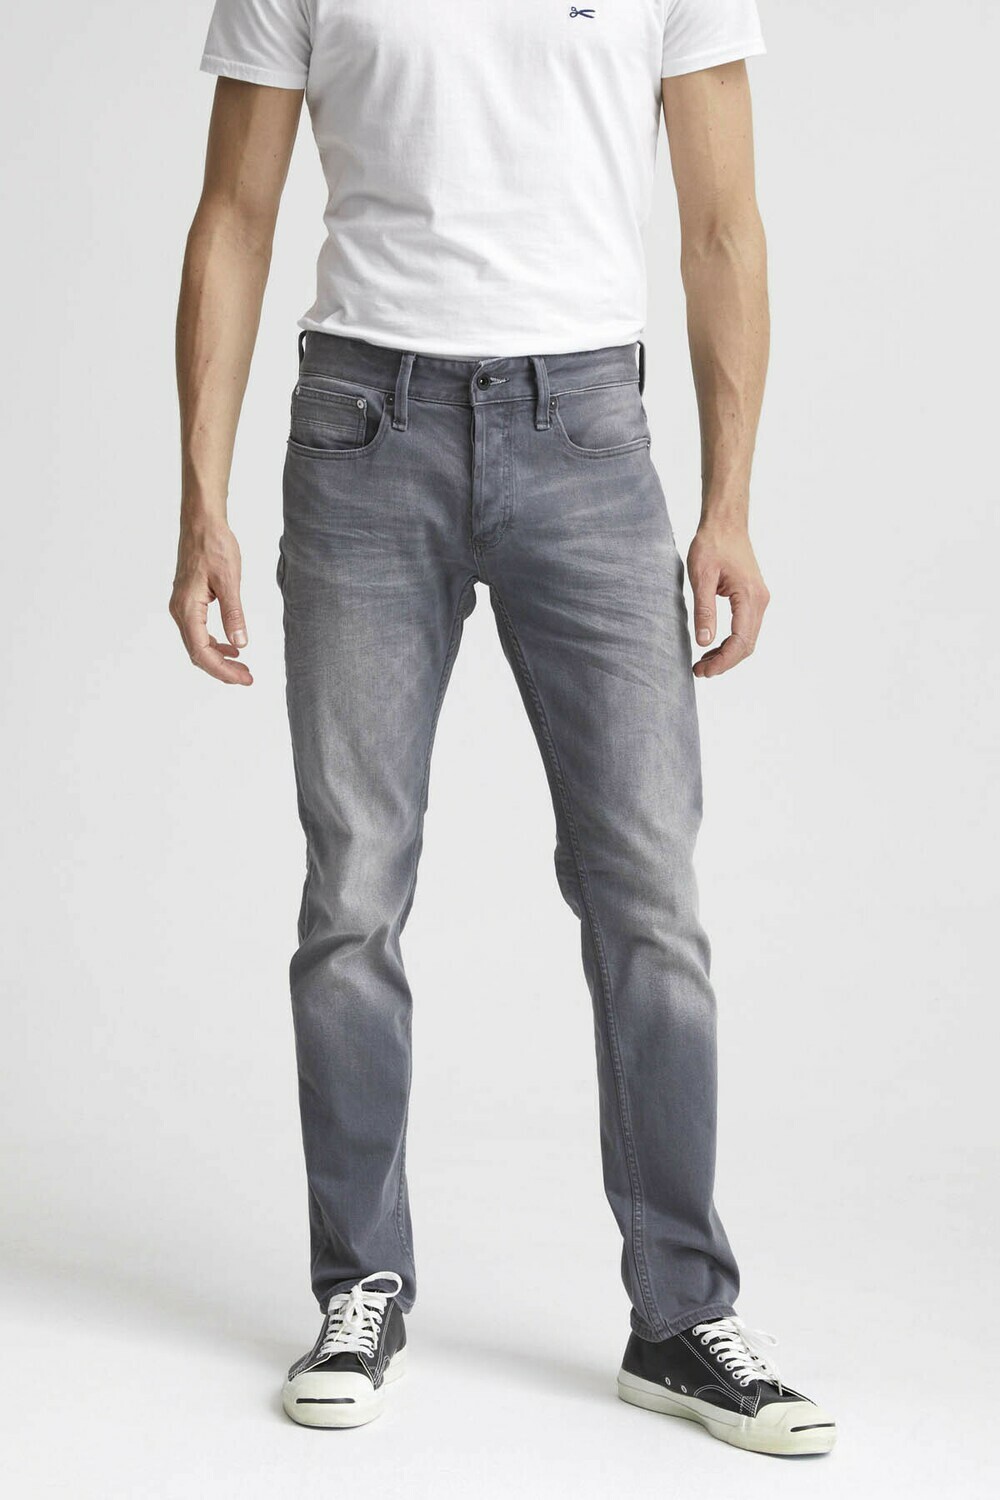 Denham Razor Jeans